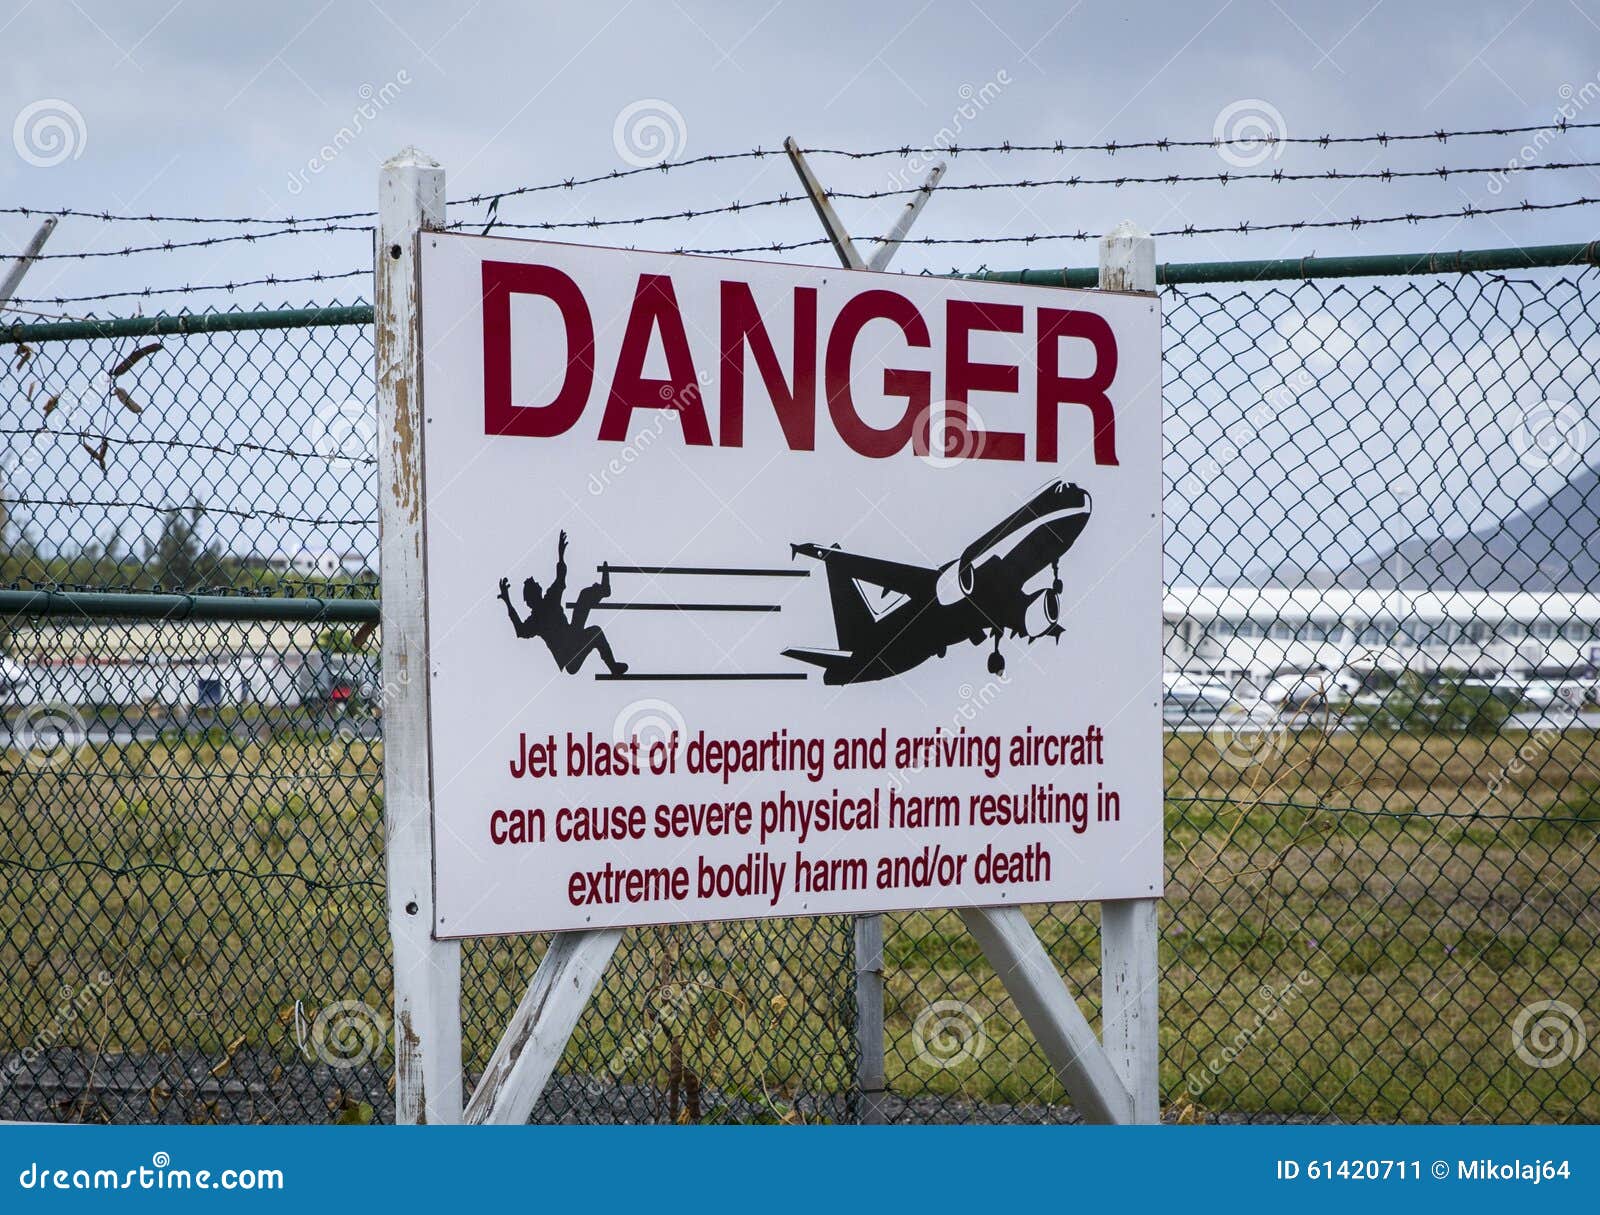 warning sign at airport on saint martin island near moho beach